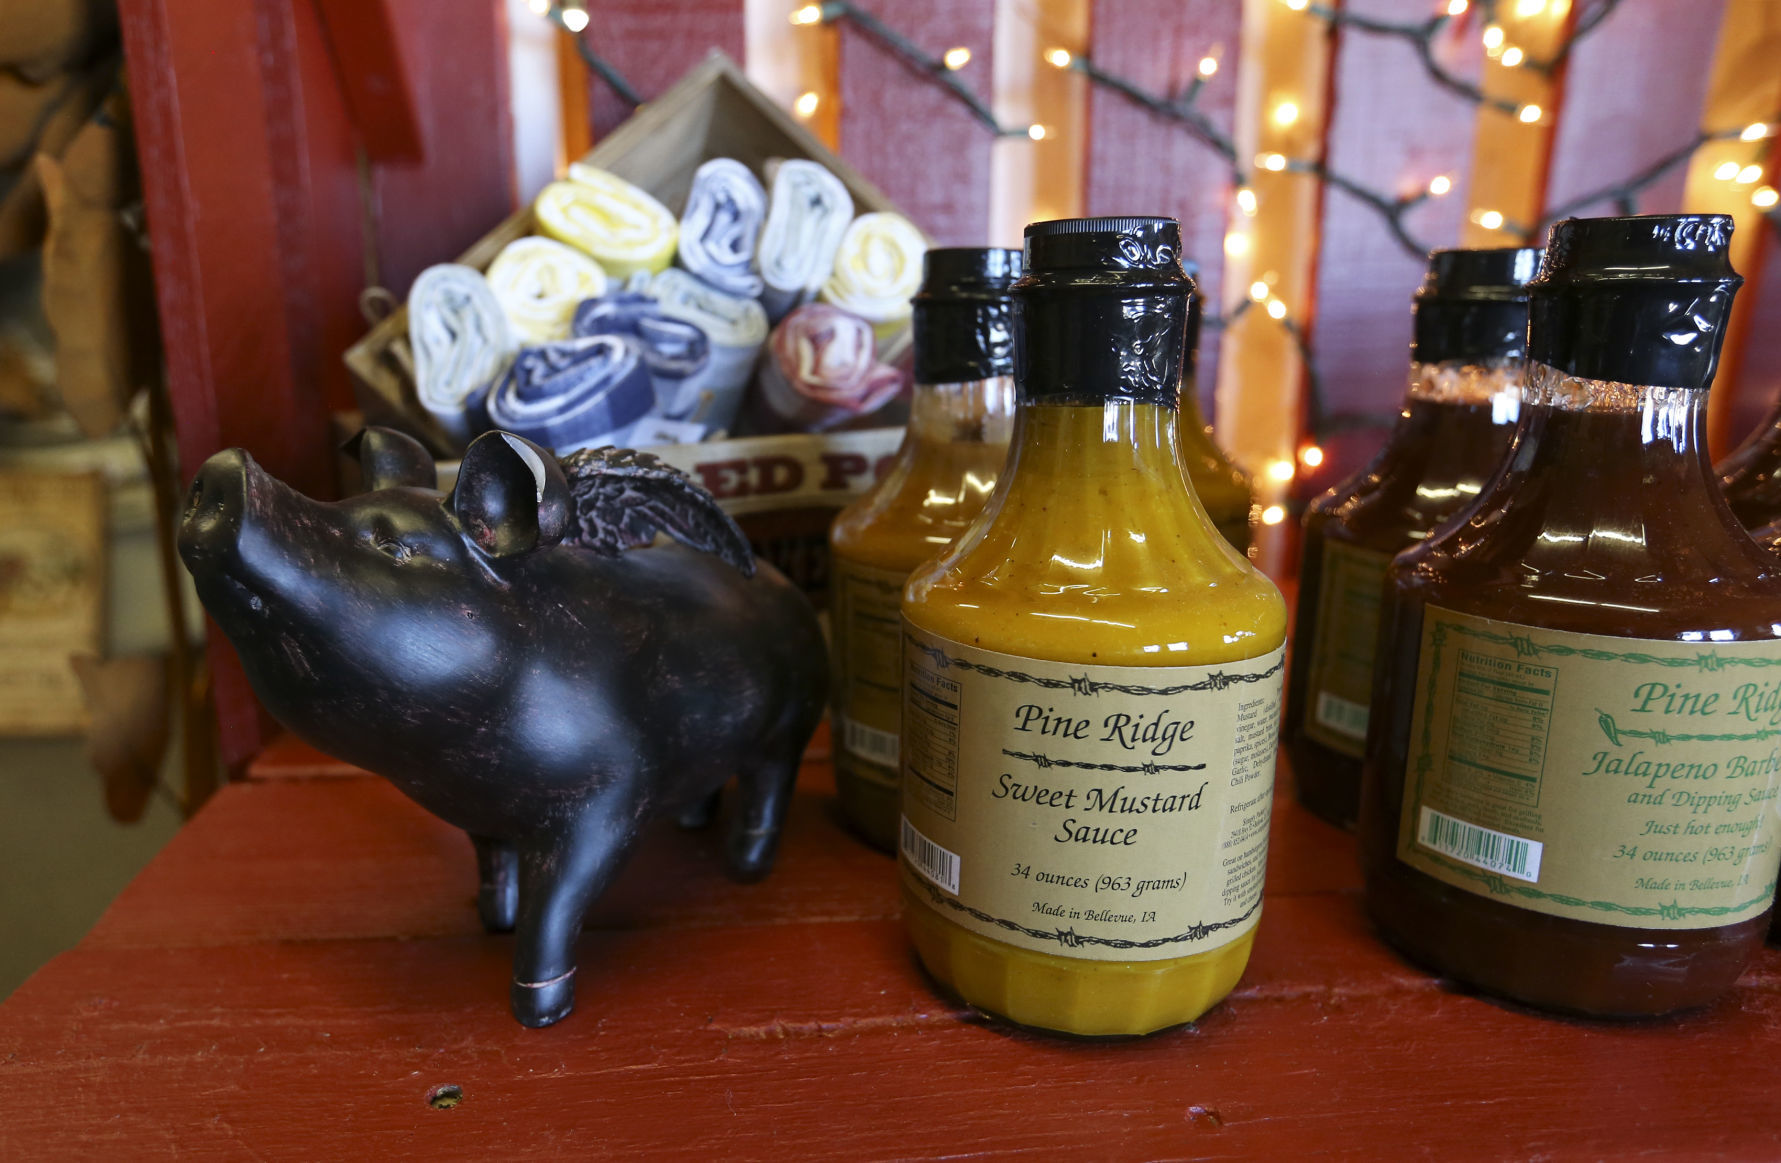 Pine Ridge Sweet Mustard Sauce sold at Simply Parker